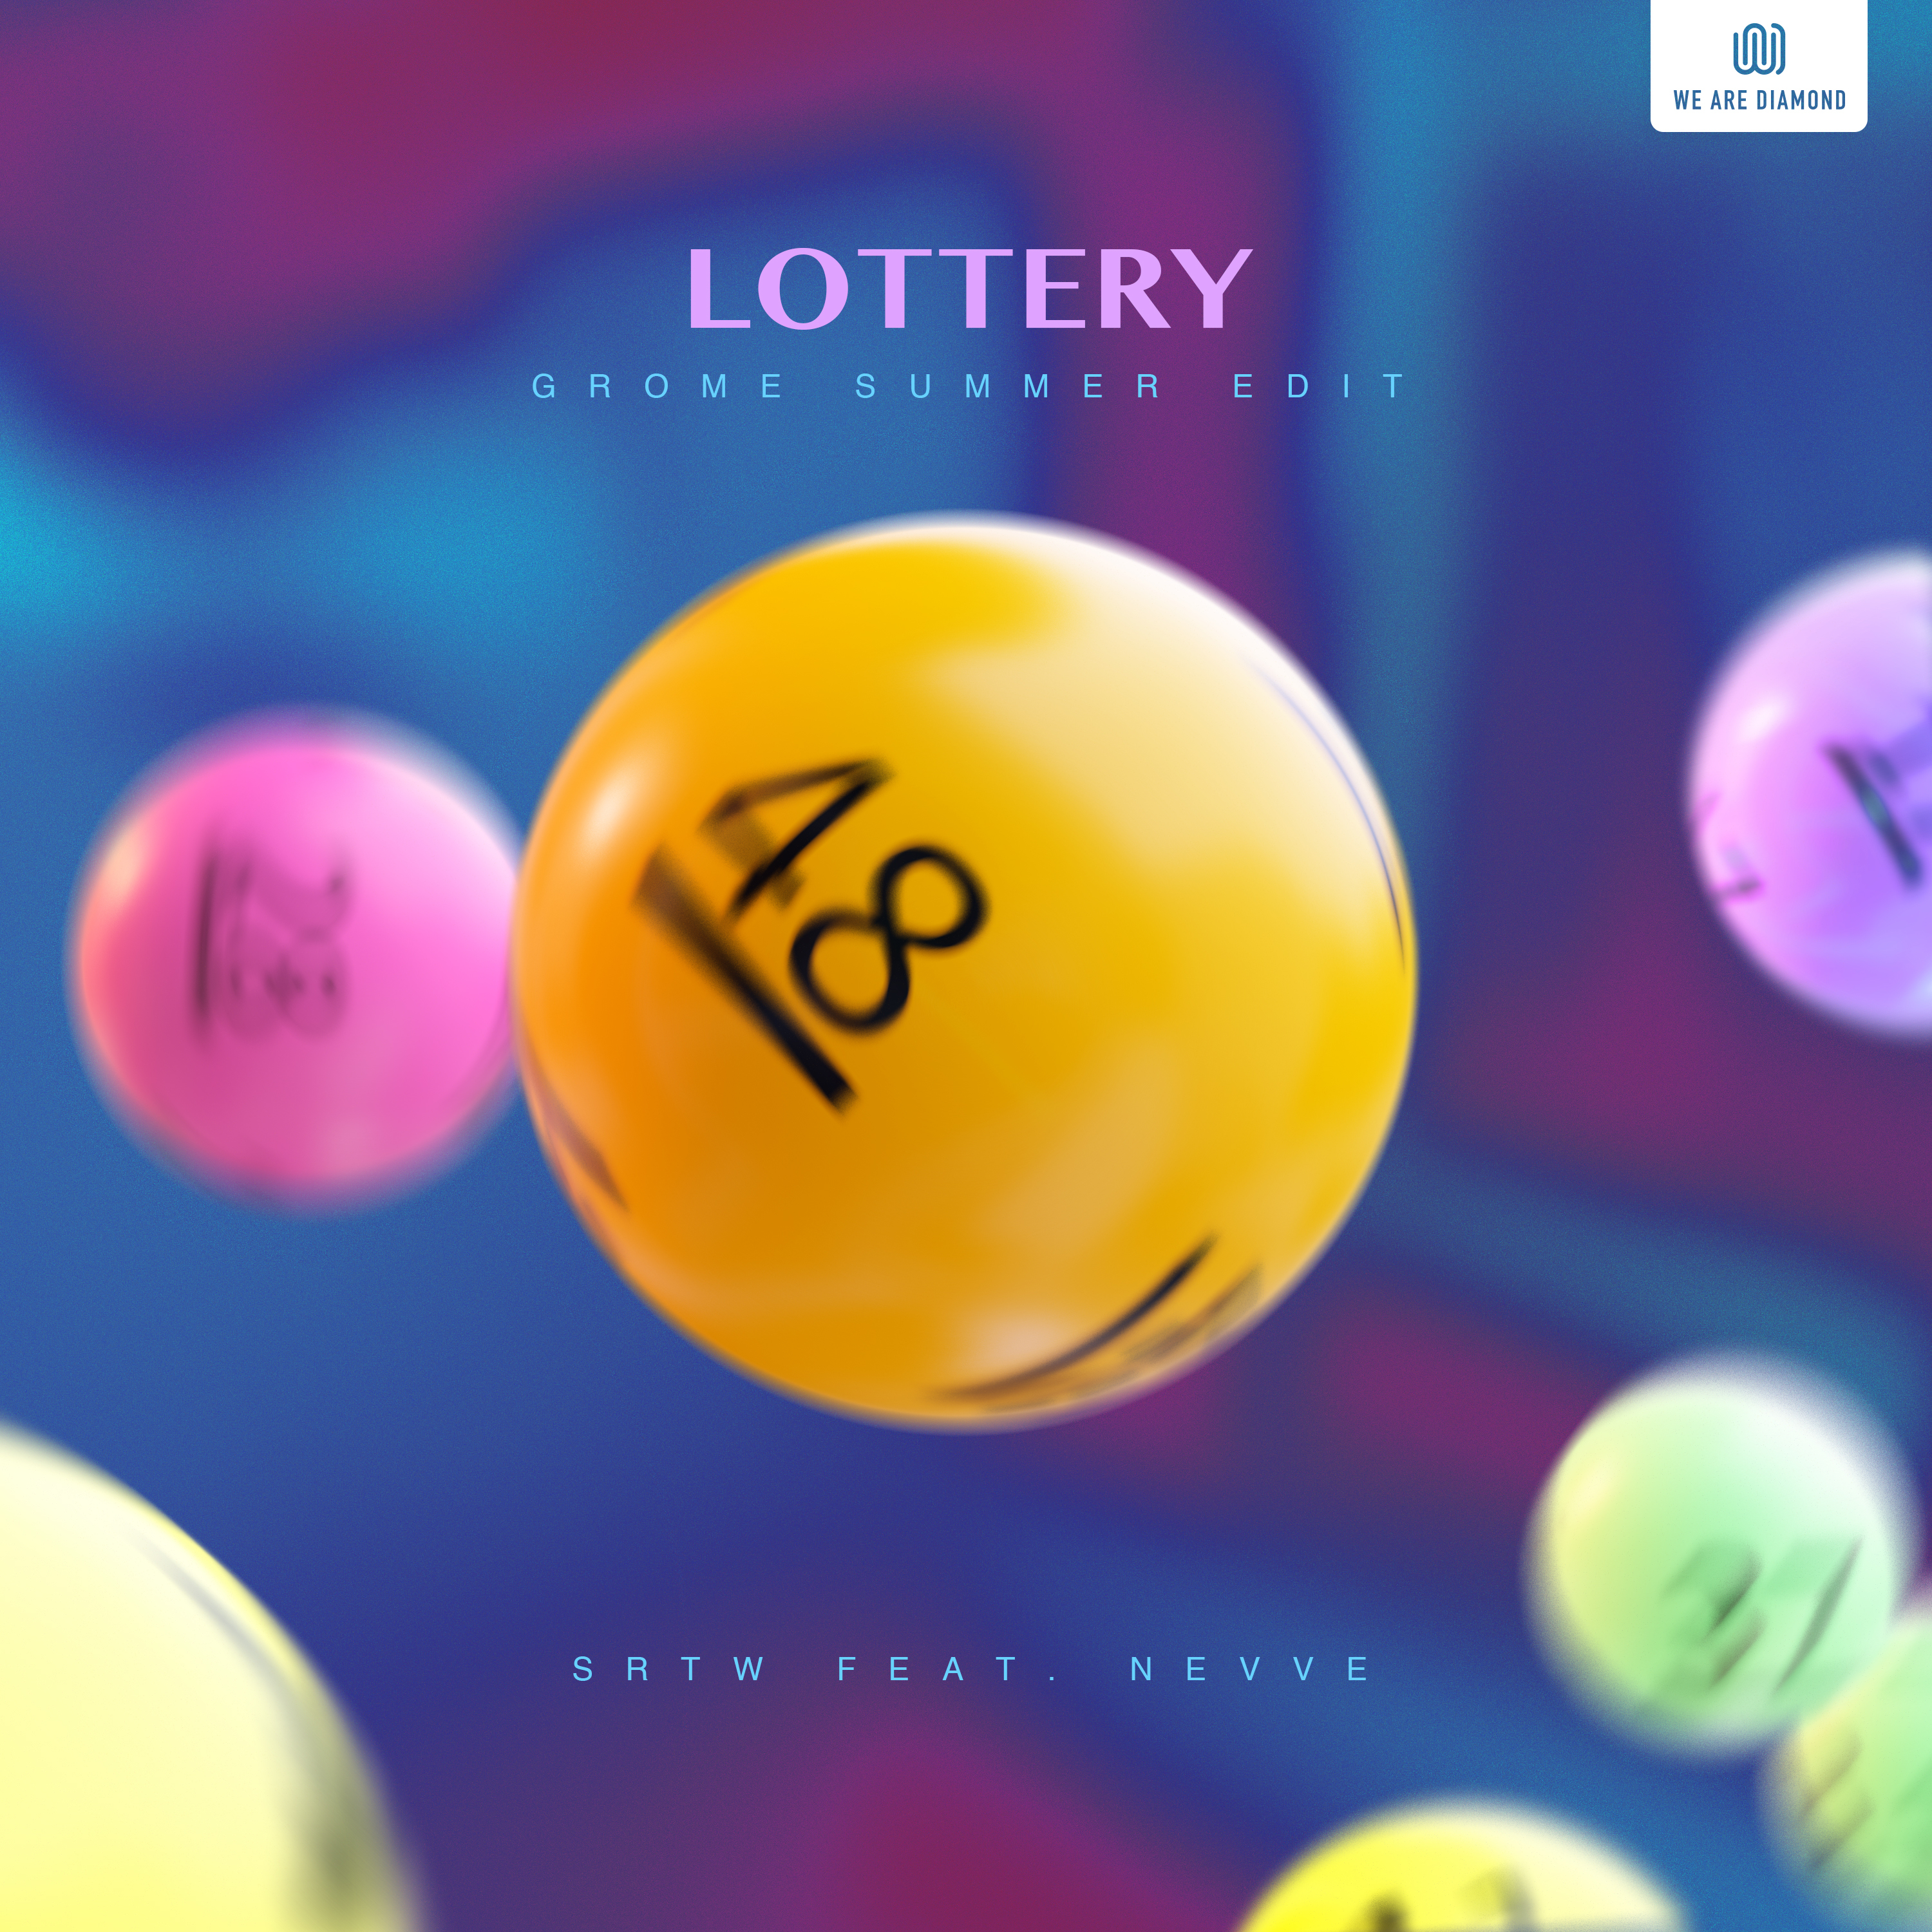 Lottery (Grome Summer Edit)